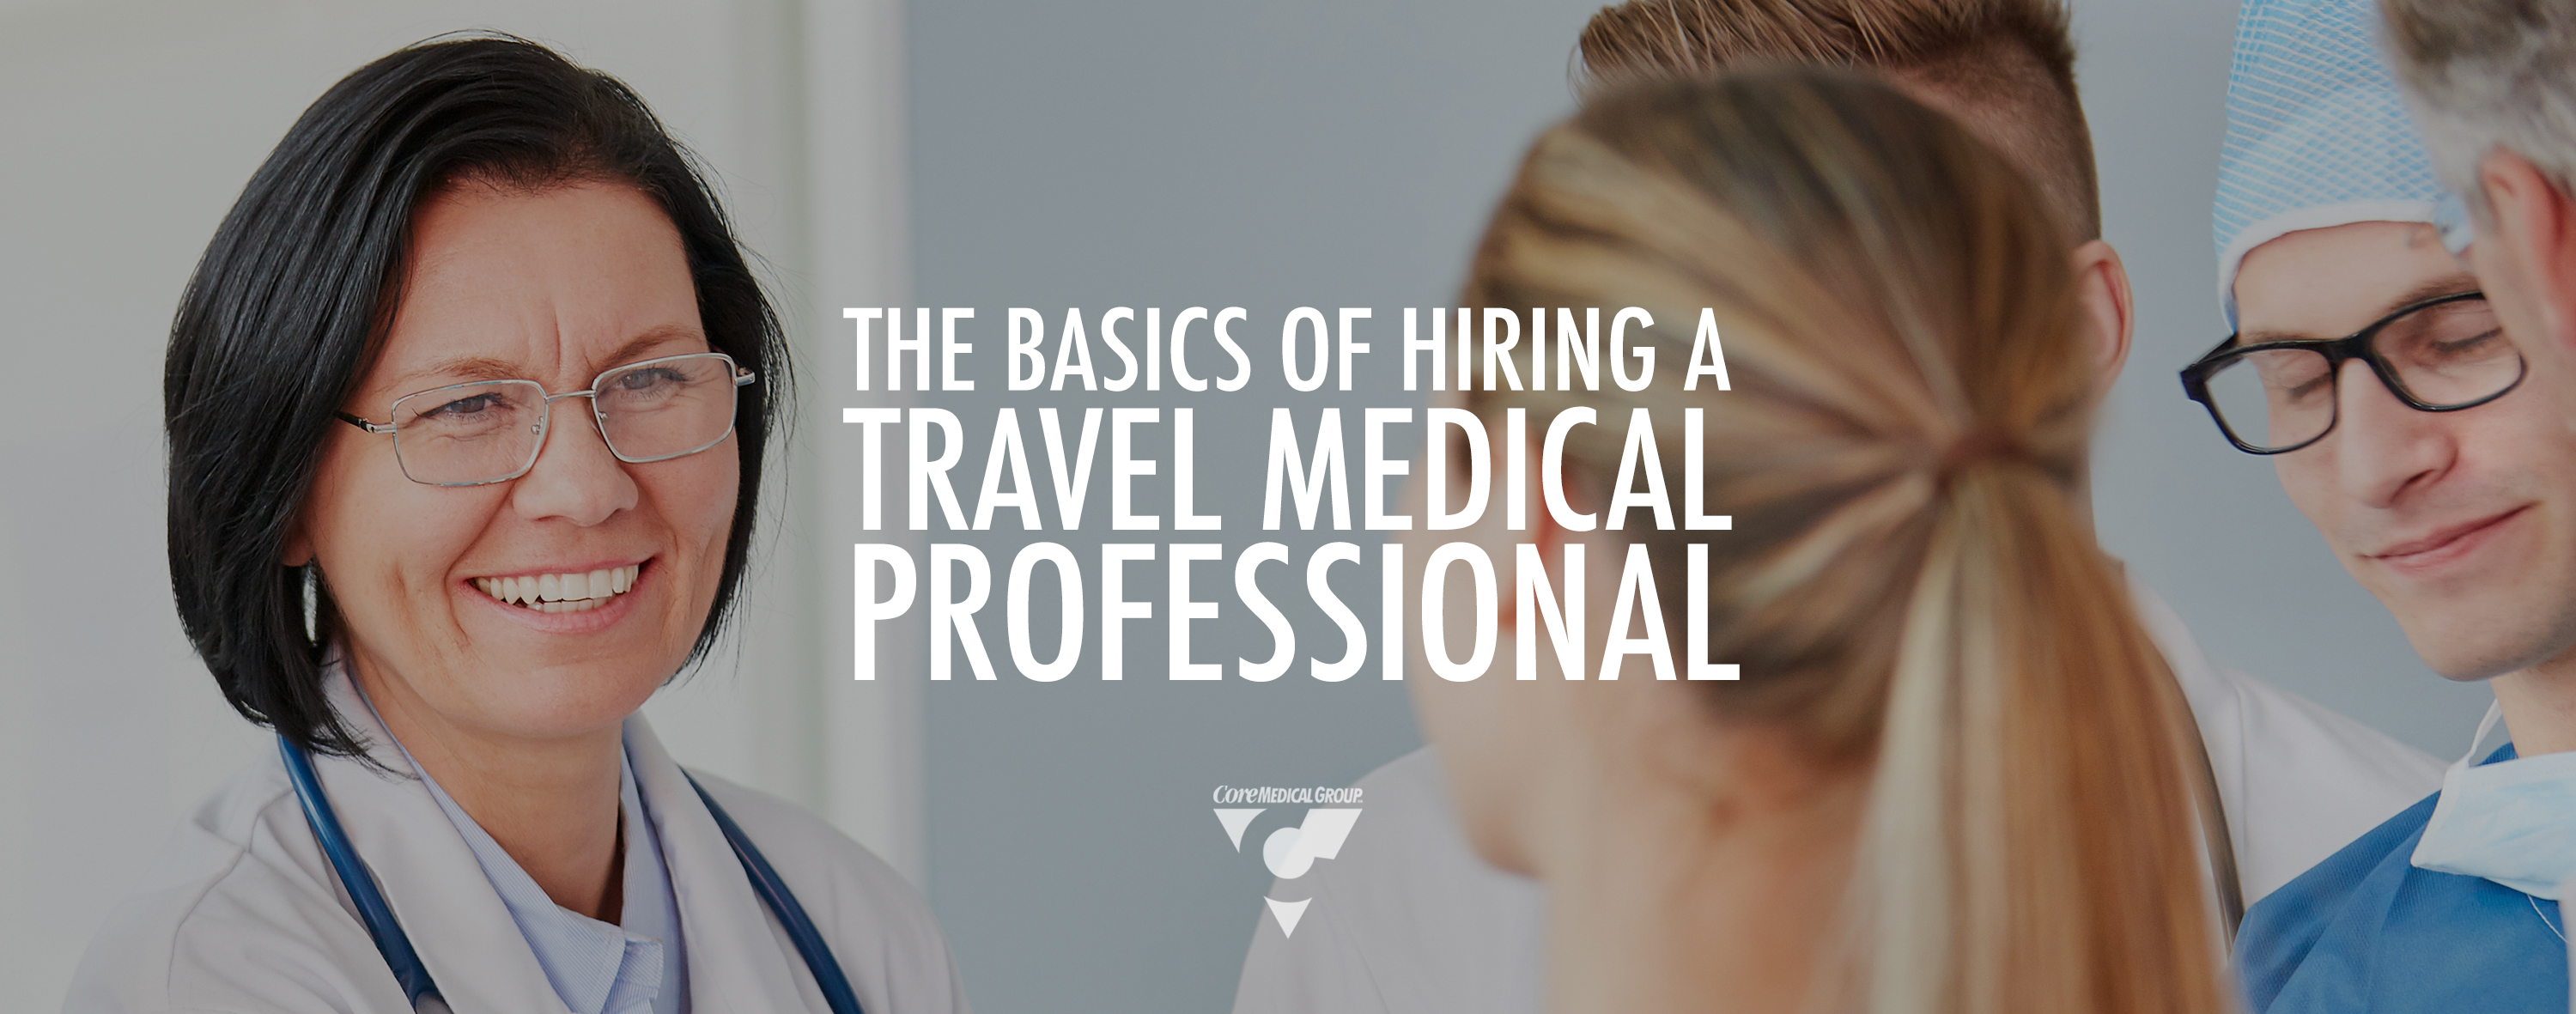 The Basics of Hiring a Travel Medical Professional